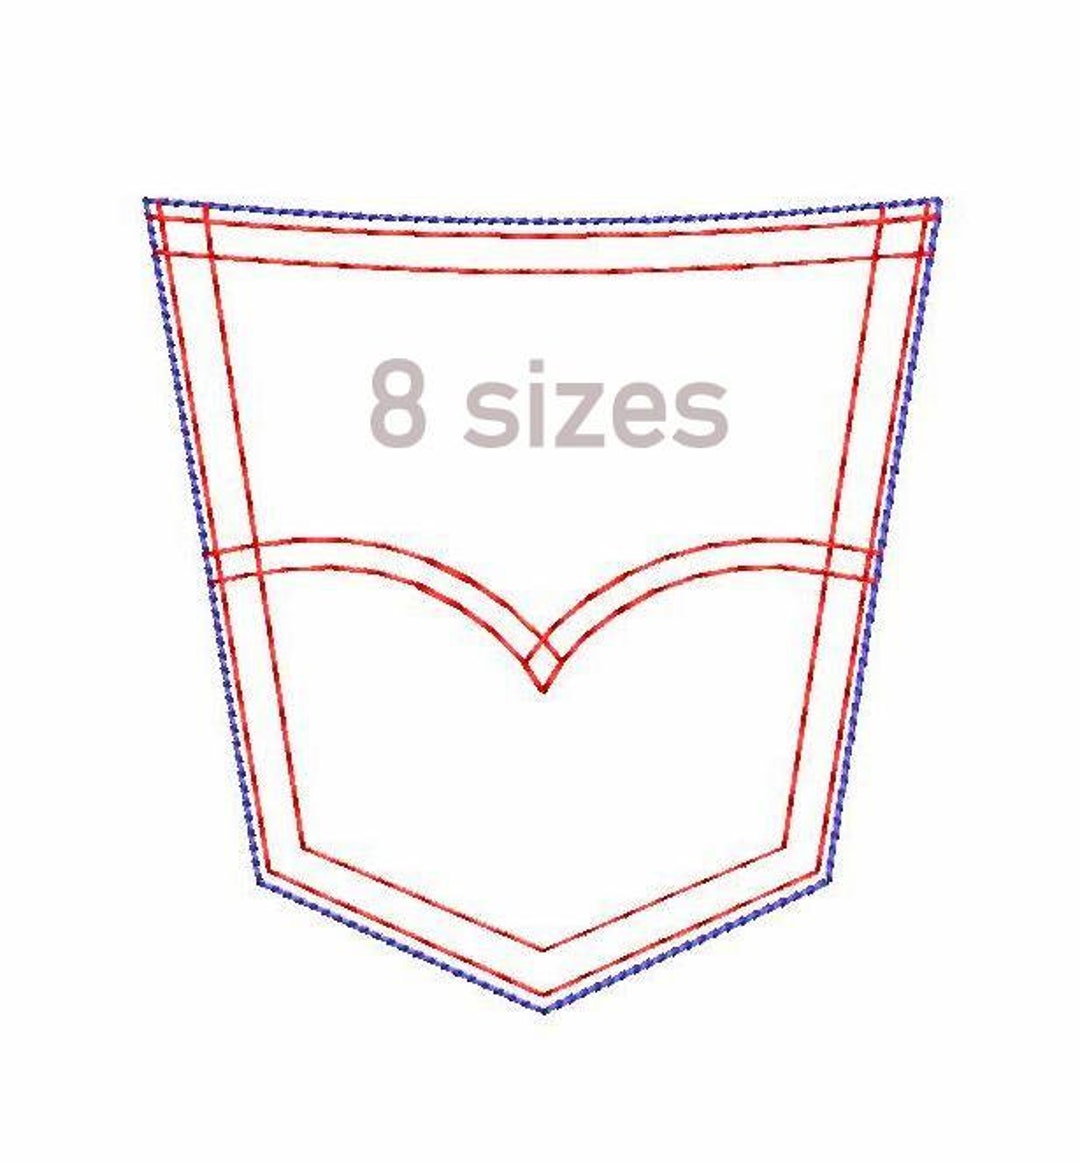 Jeans Pocket Machine Embroidery Design 8 SIZES Sketch Machine - Etsy